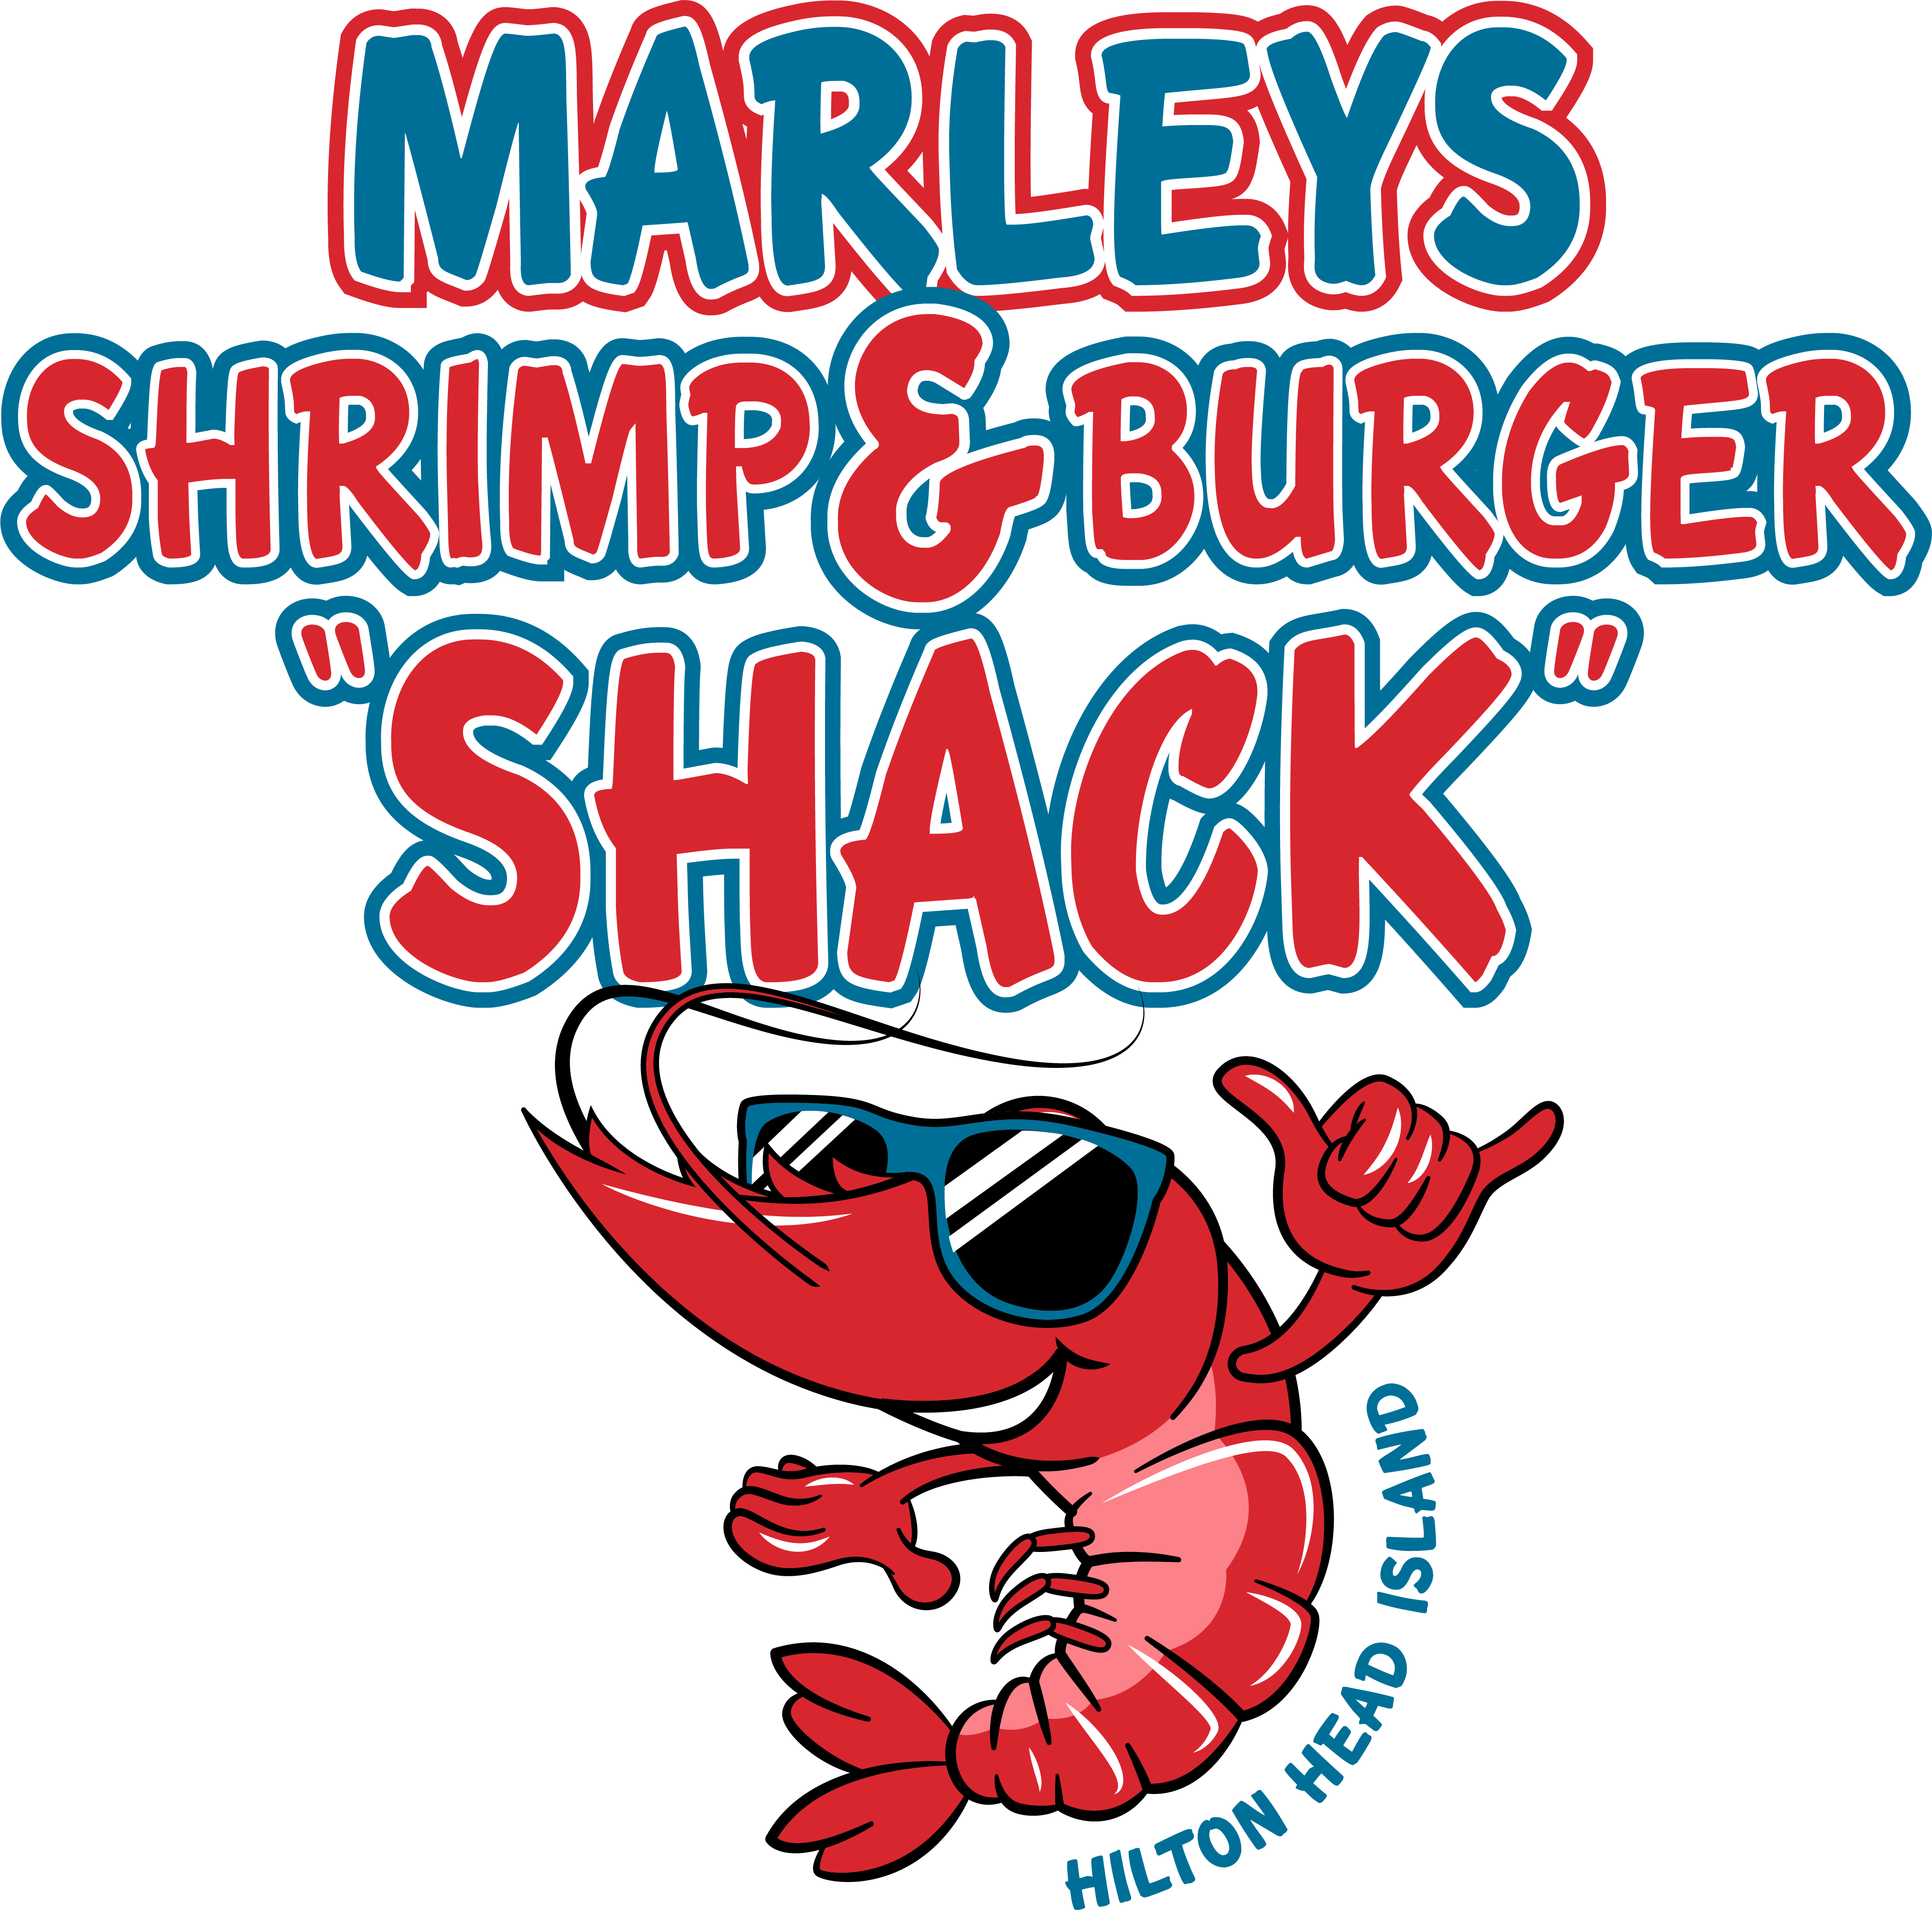 Marleys shrimp and burger shack